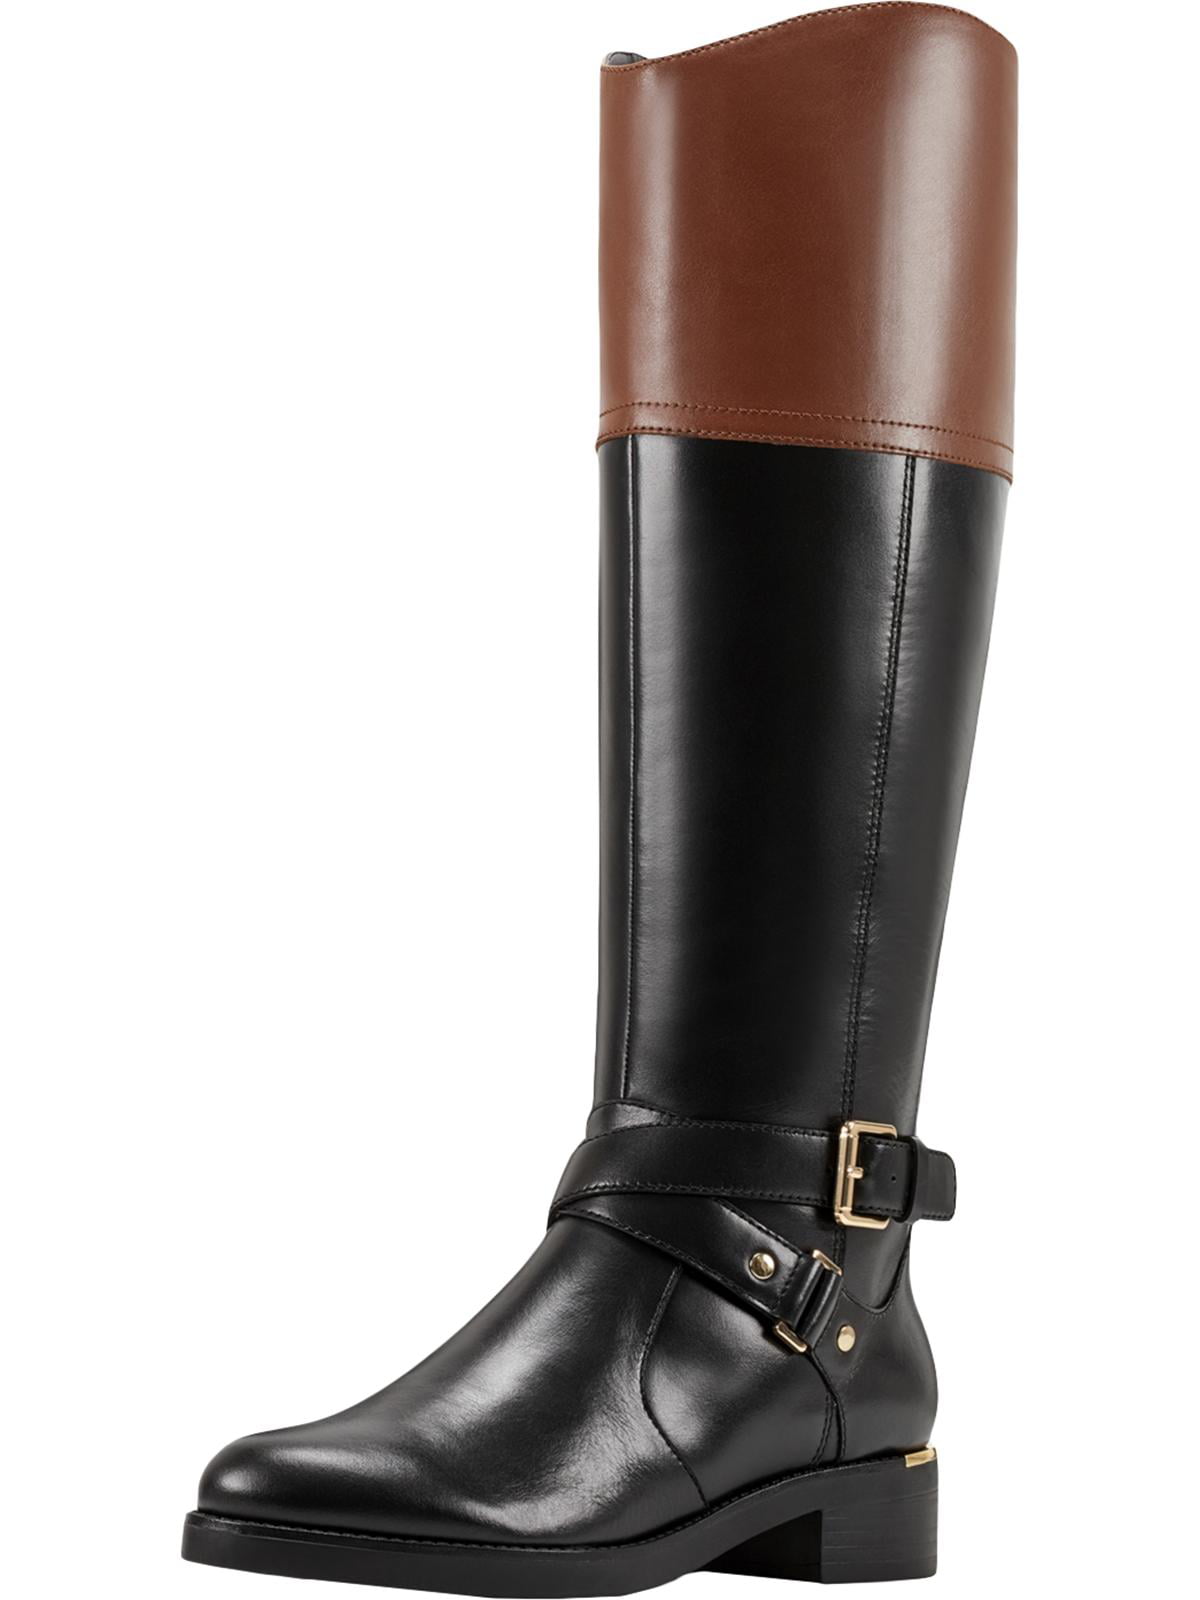 Bandolino Womens Jimani Leather Knee-High Riding Boots Black 7.5 Medium ...